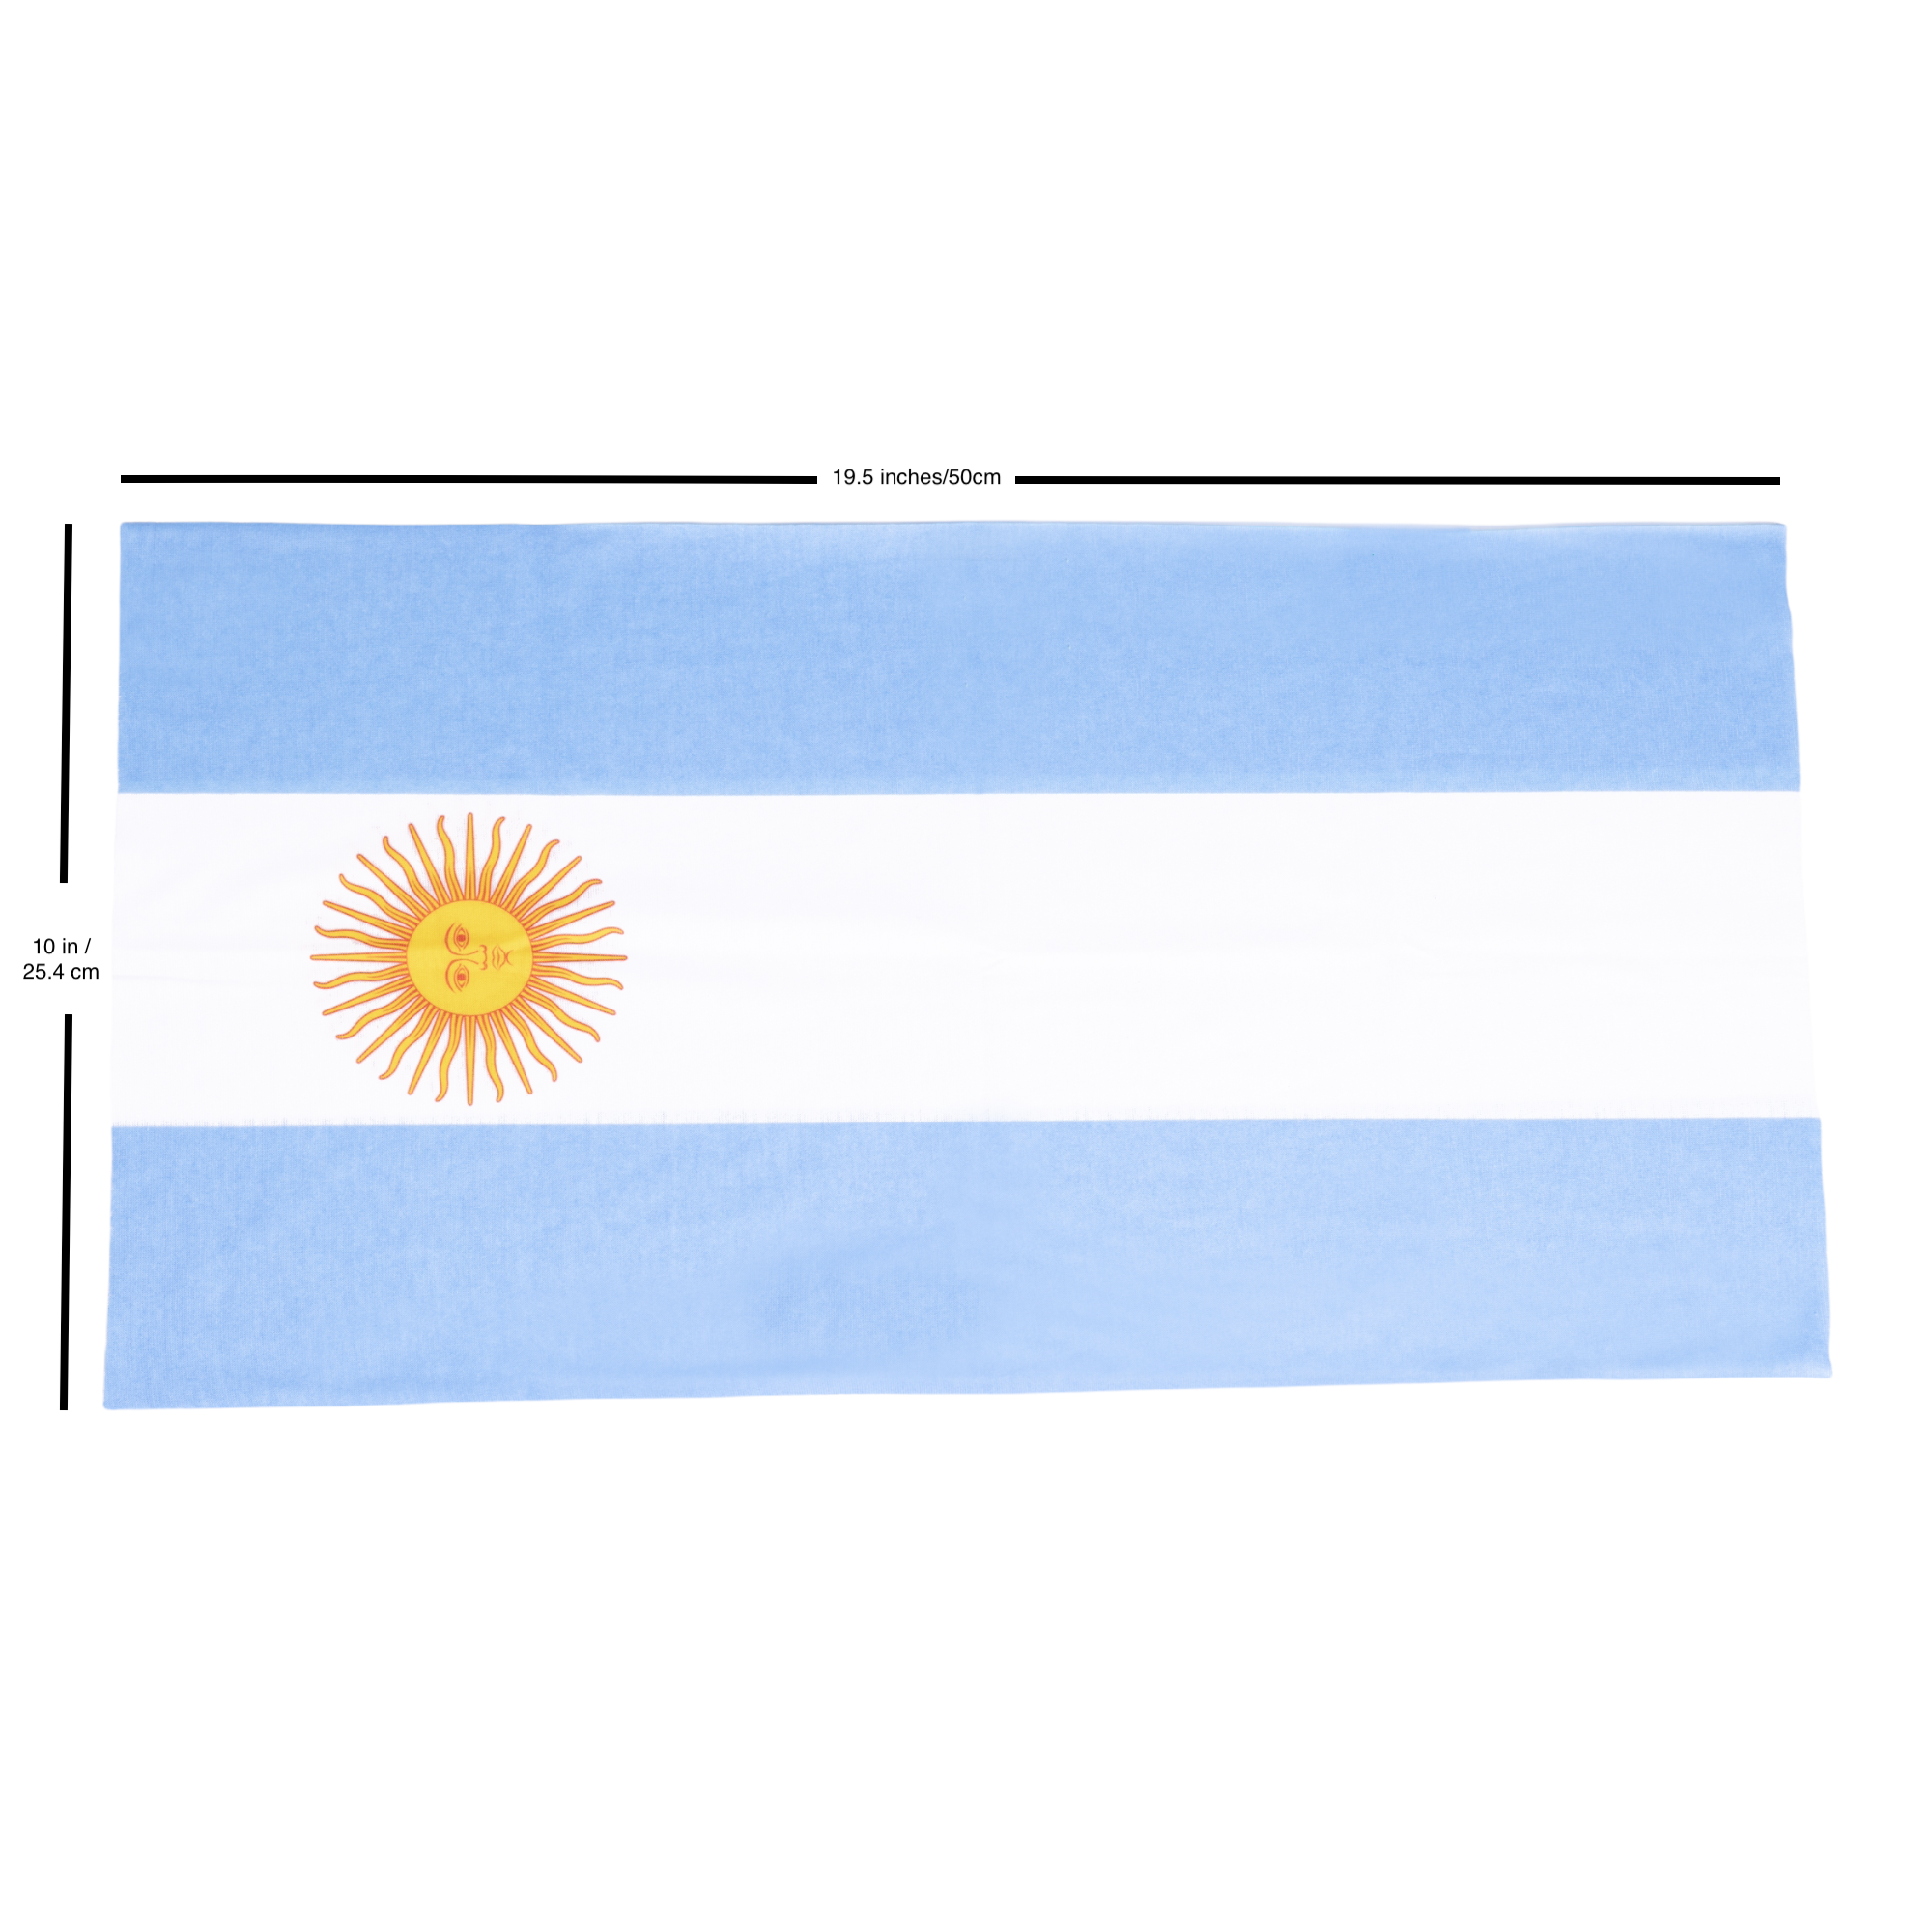 Argentina Fans Football 3 Pcs Kit Free Body Paint Stick